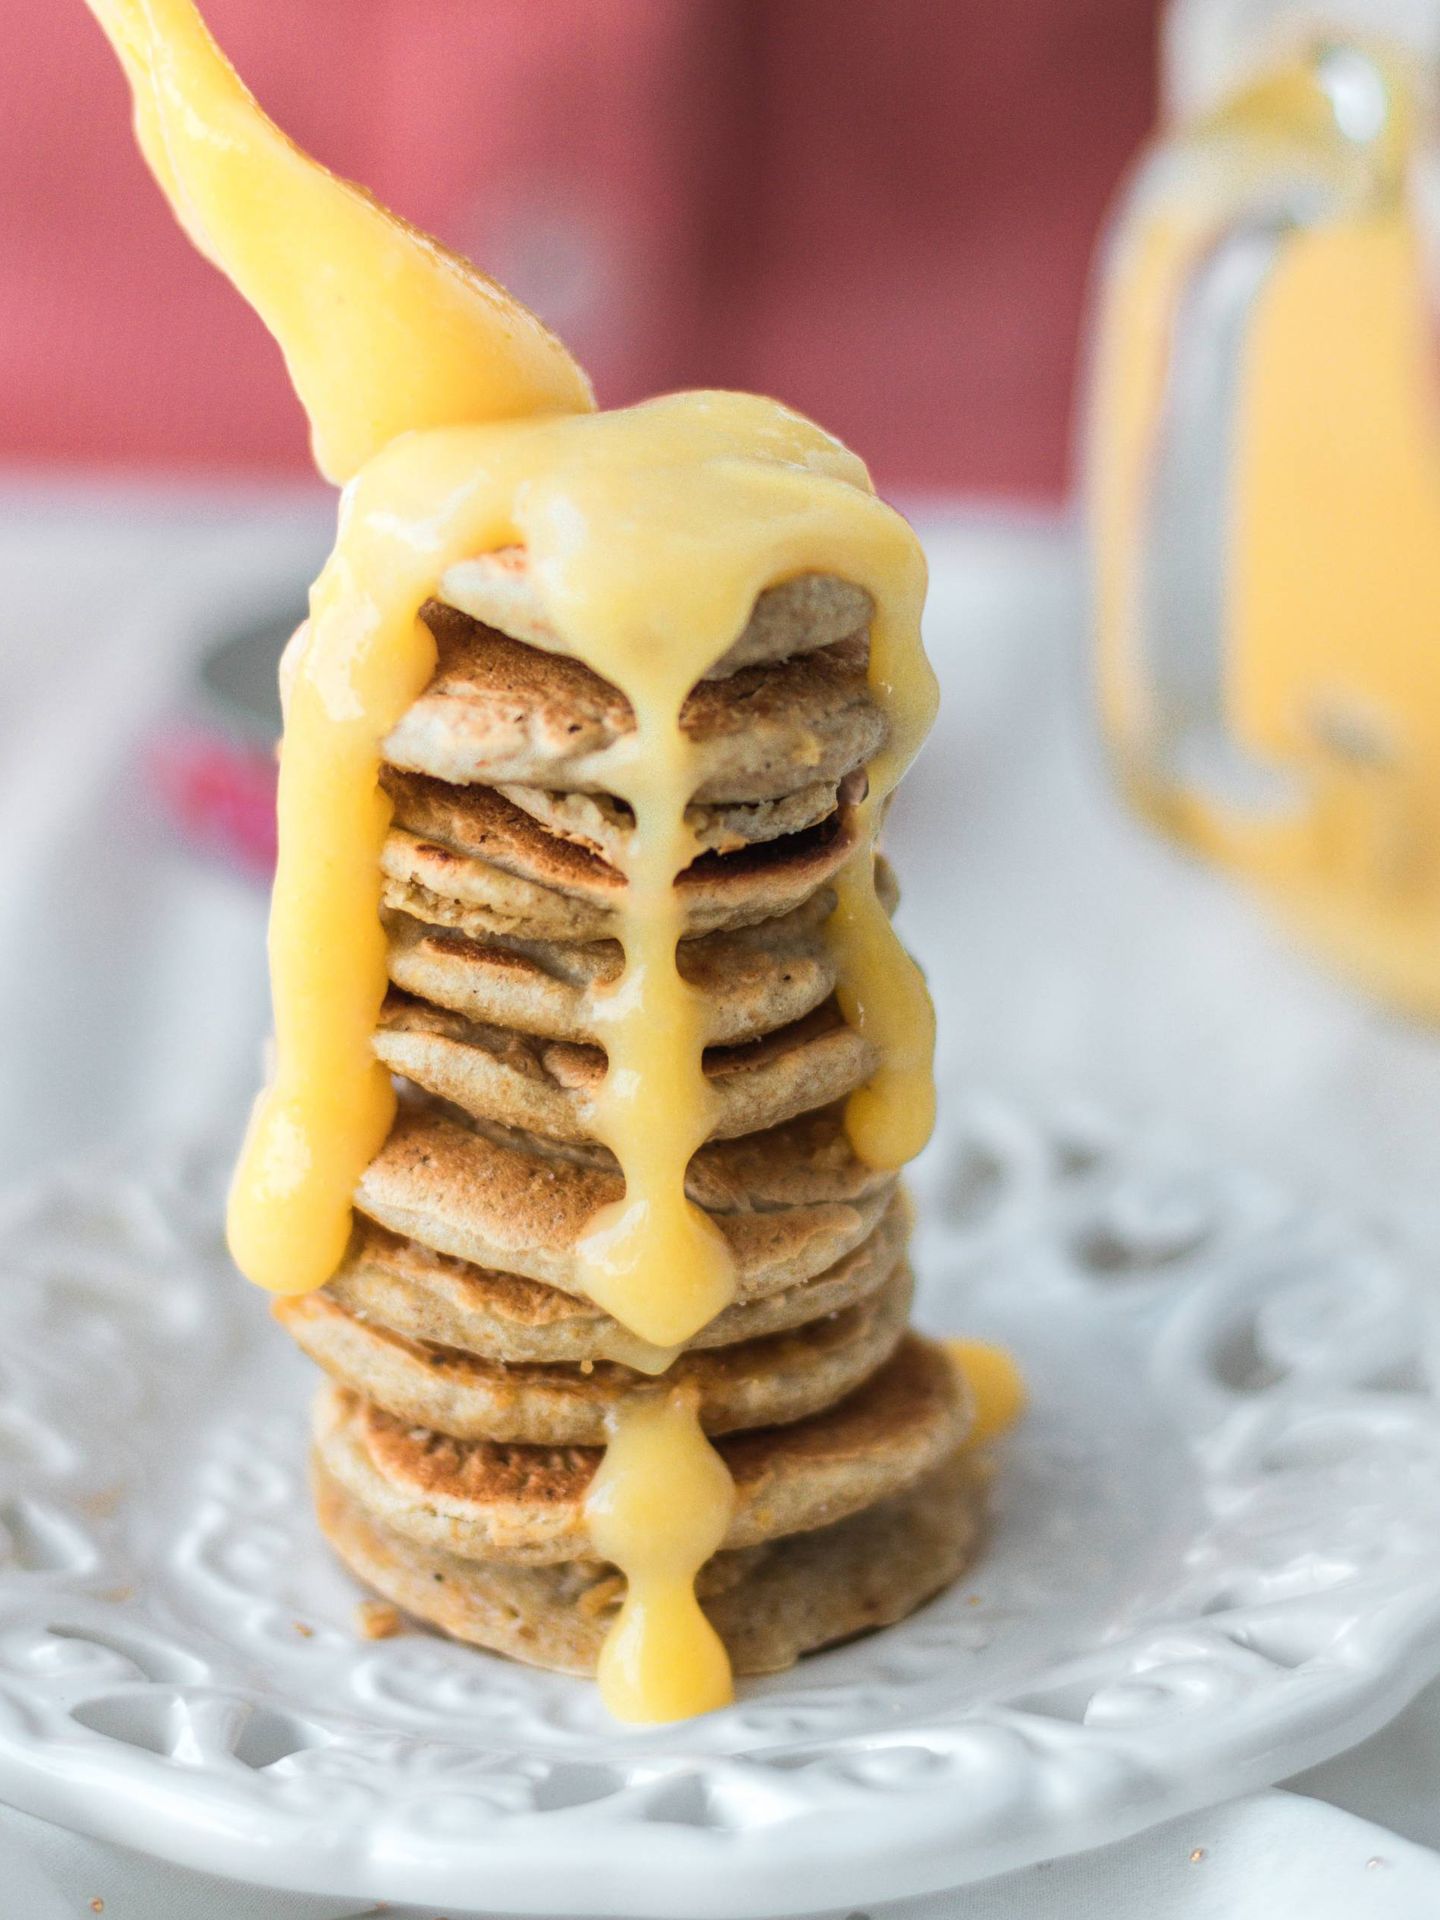 Cereal pancakes para desayunar. (Ariana Suárez para Unsplash)